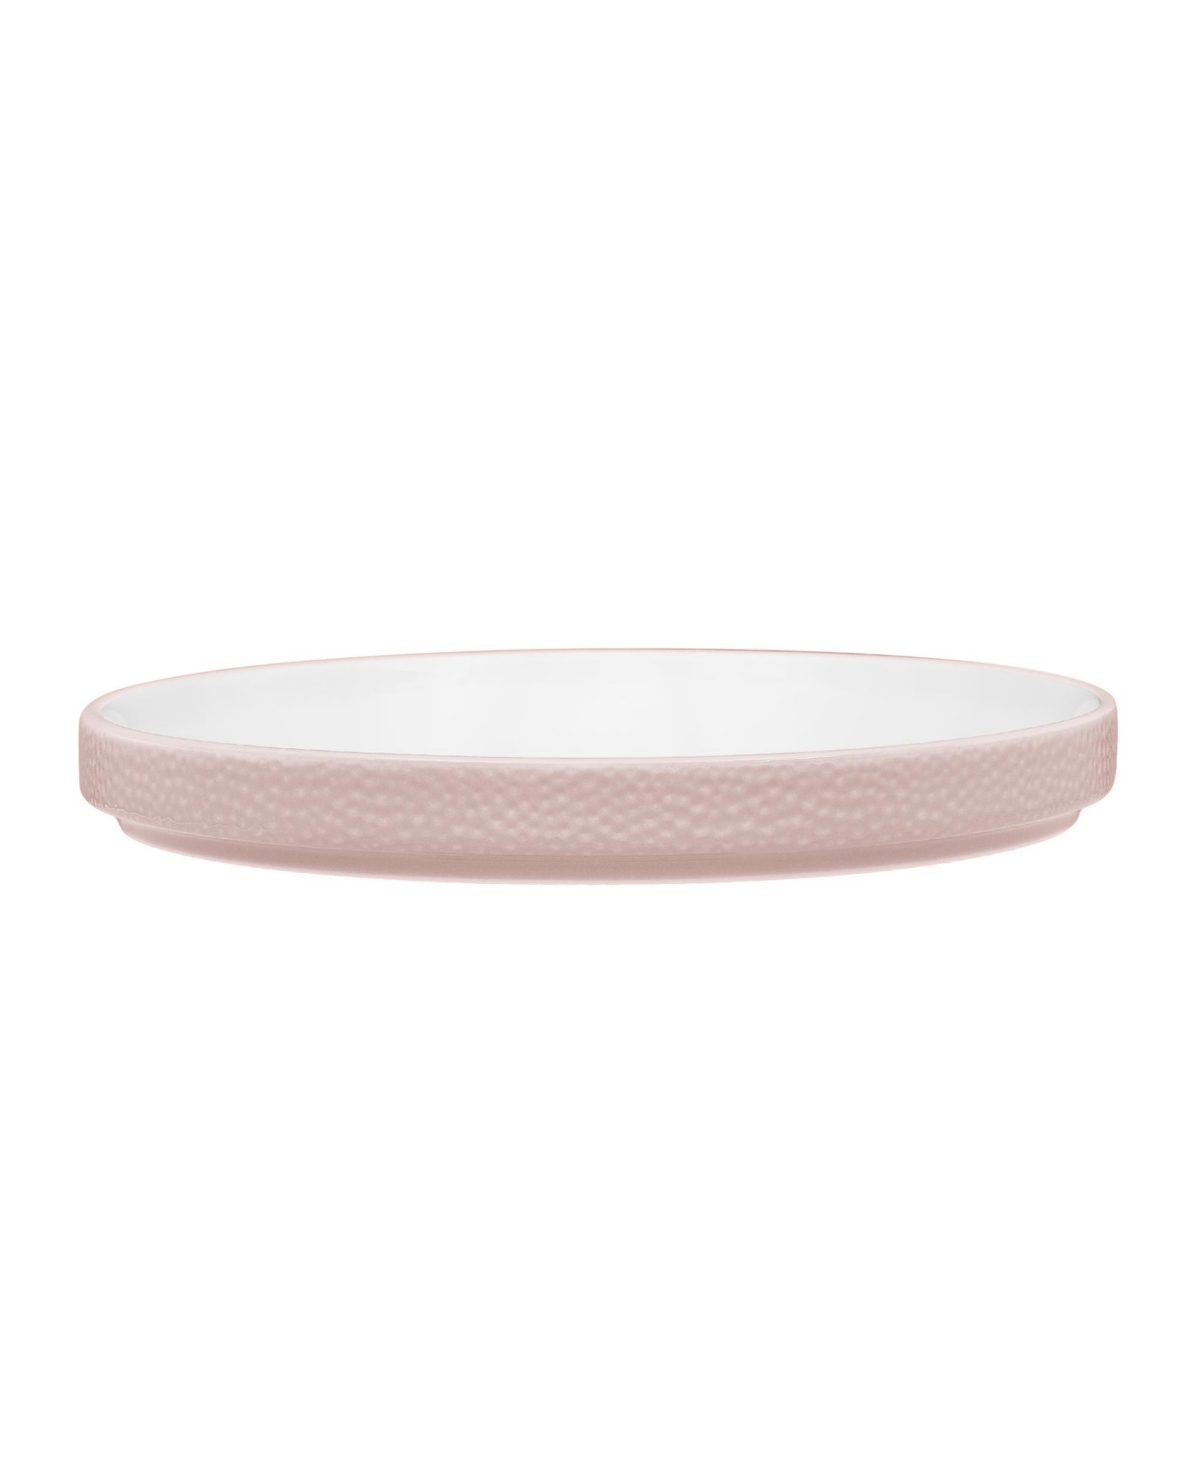 Colortex Stone Salad Plate - Blush